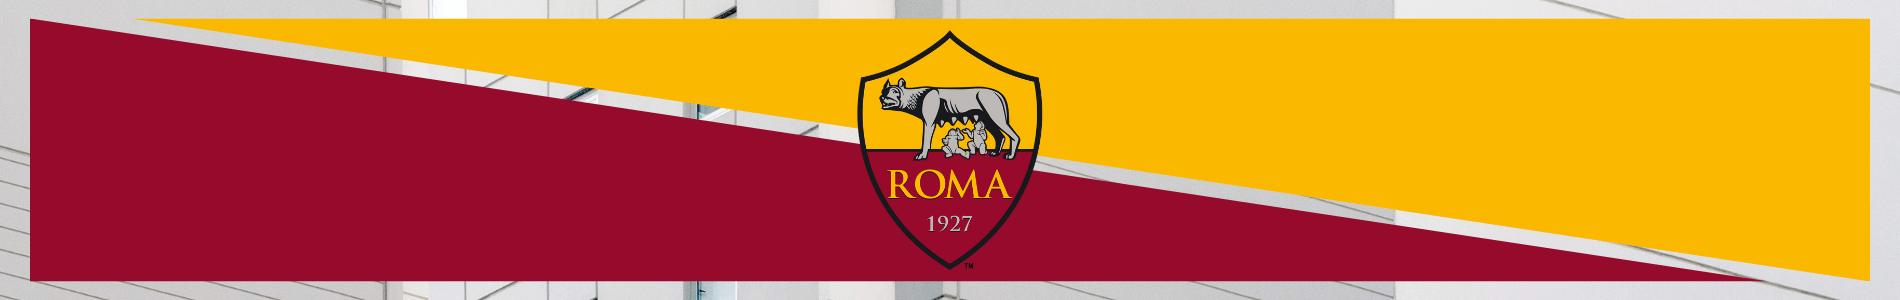 banner maillot de foot as roma